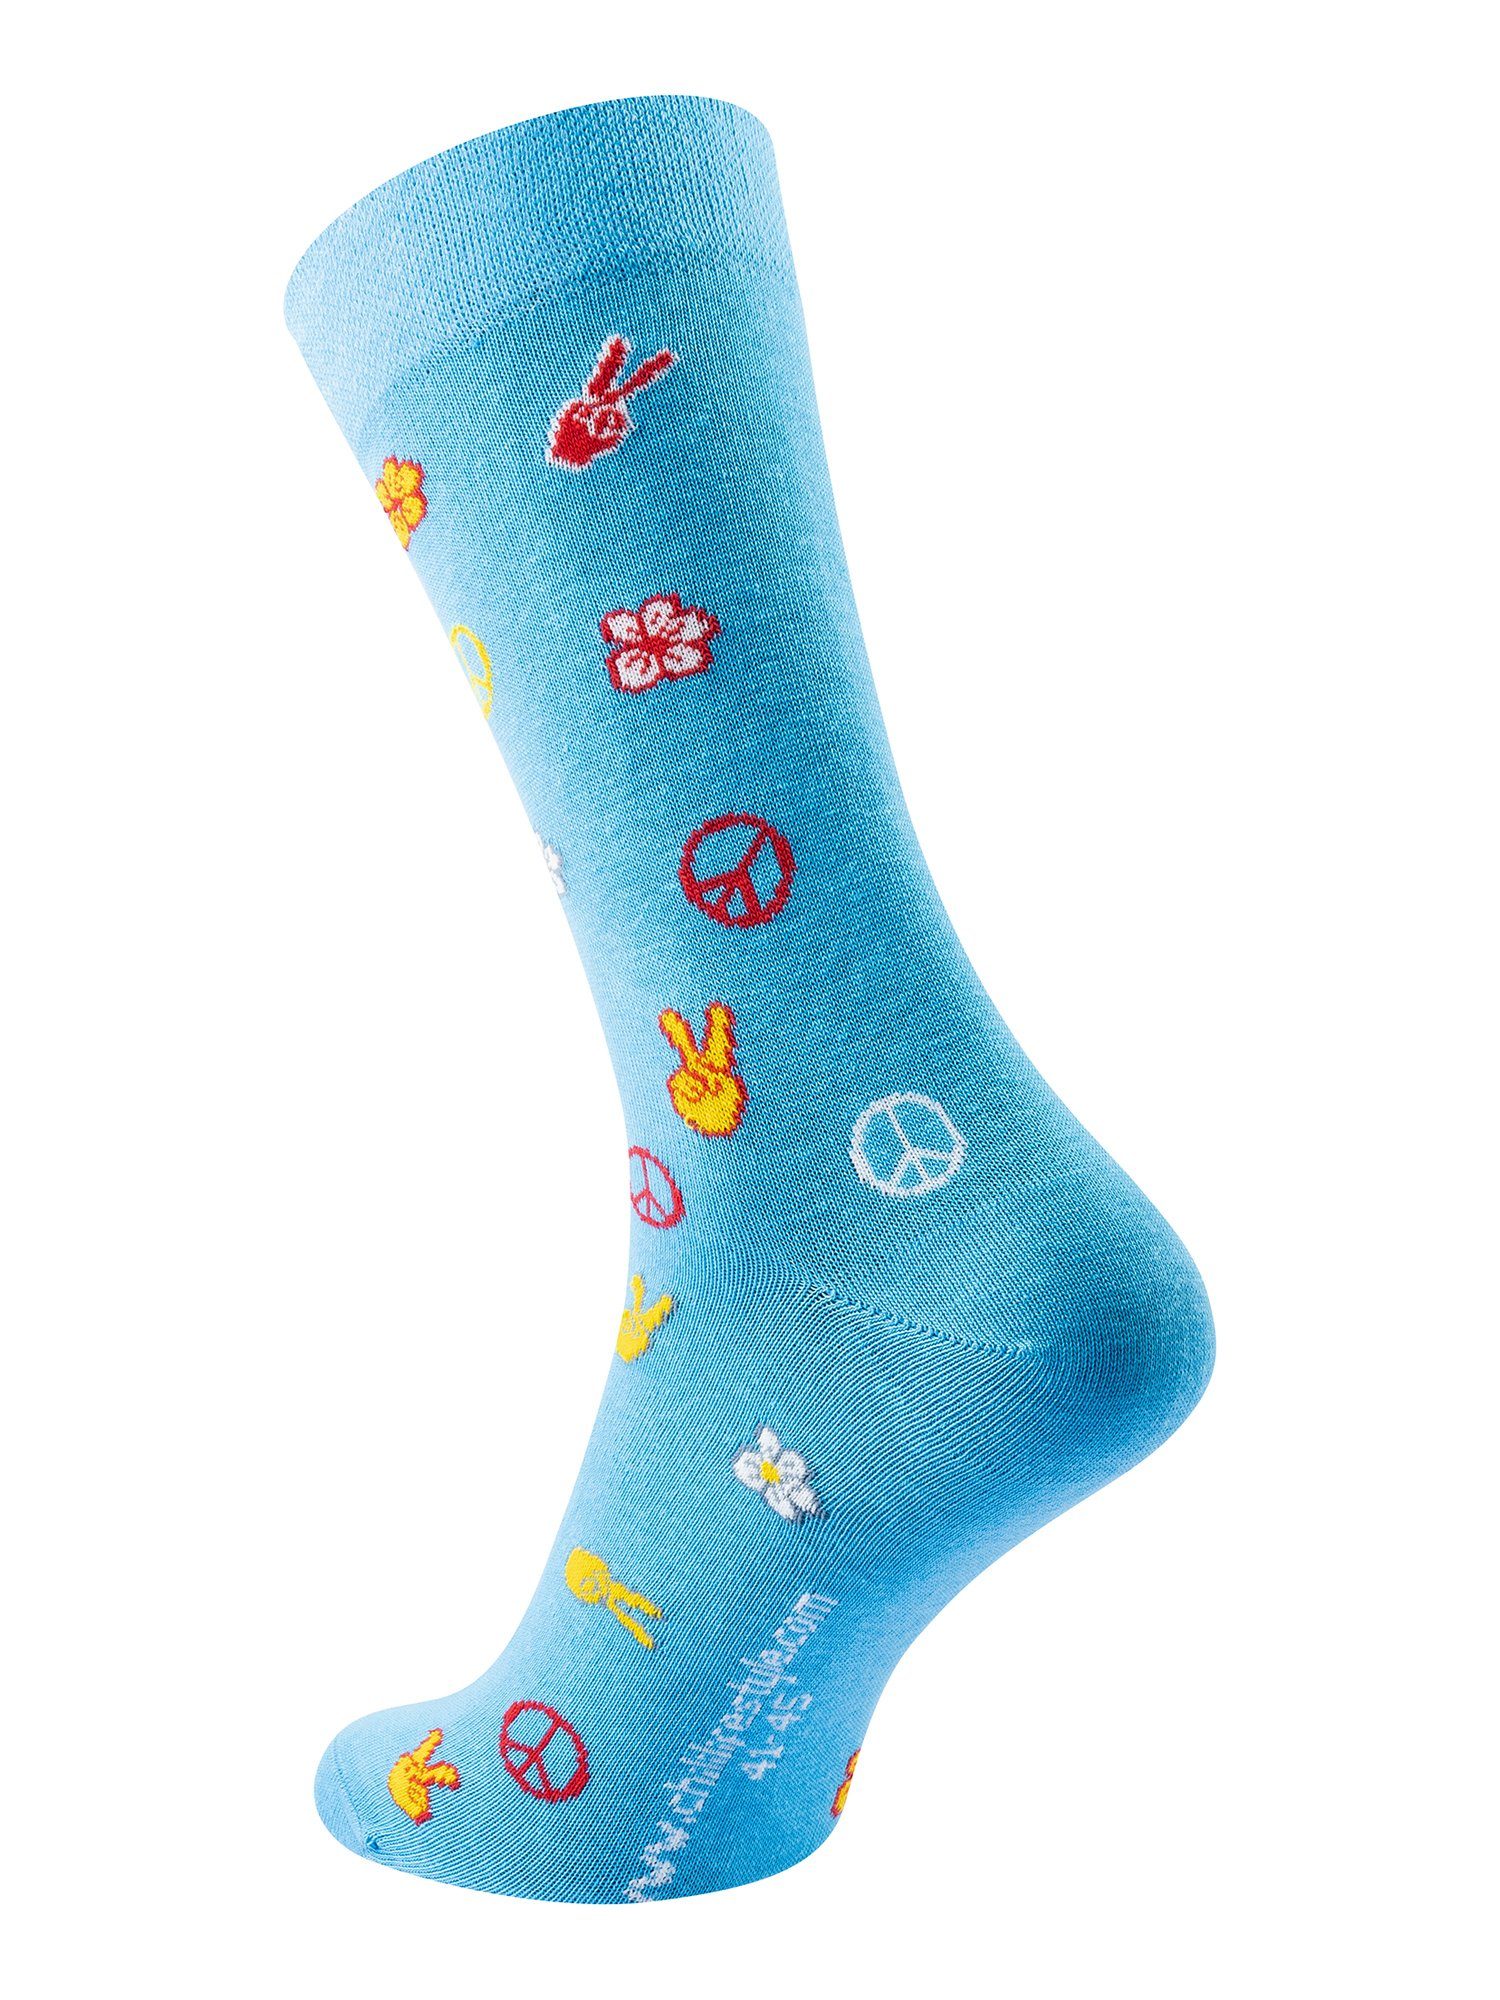 Chili Lifestyle Freizeitsocken Banderole Socks Peace Leisure